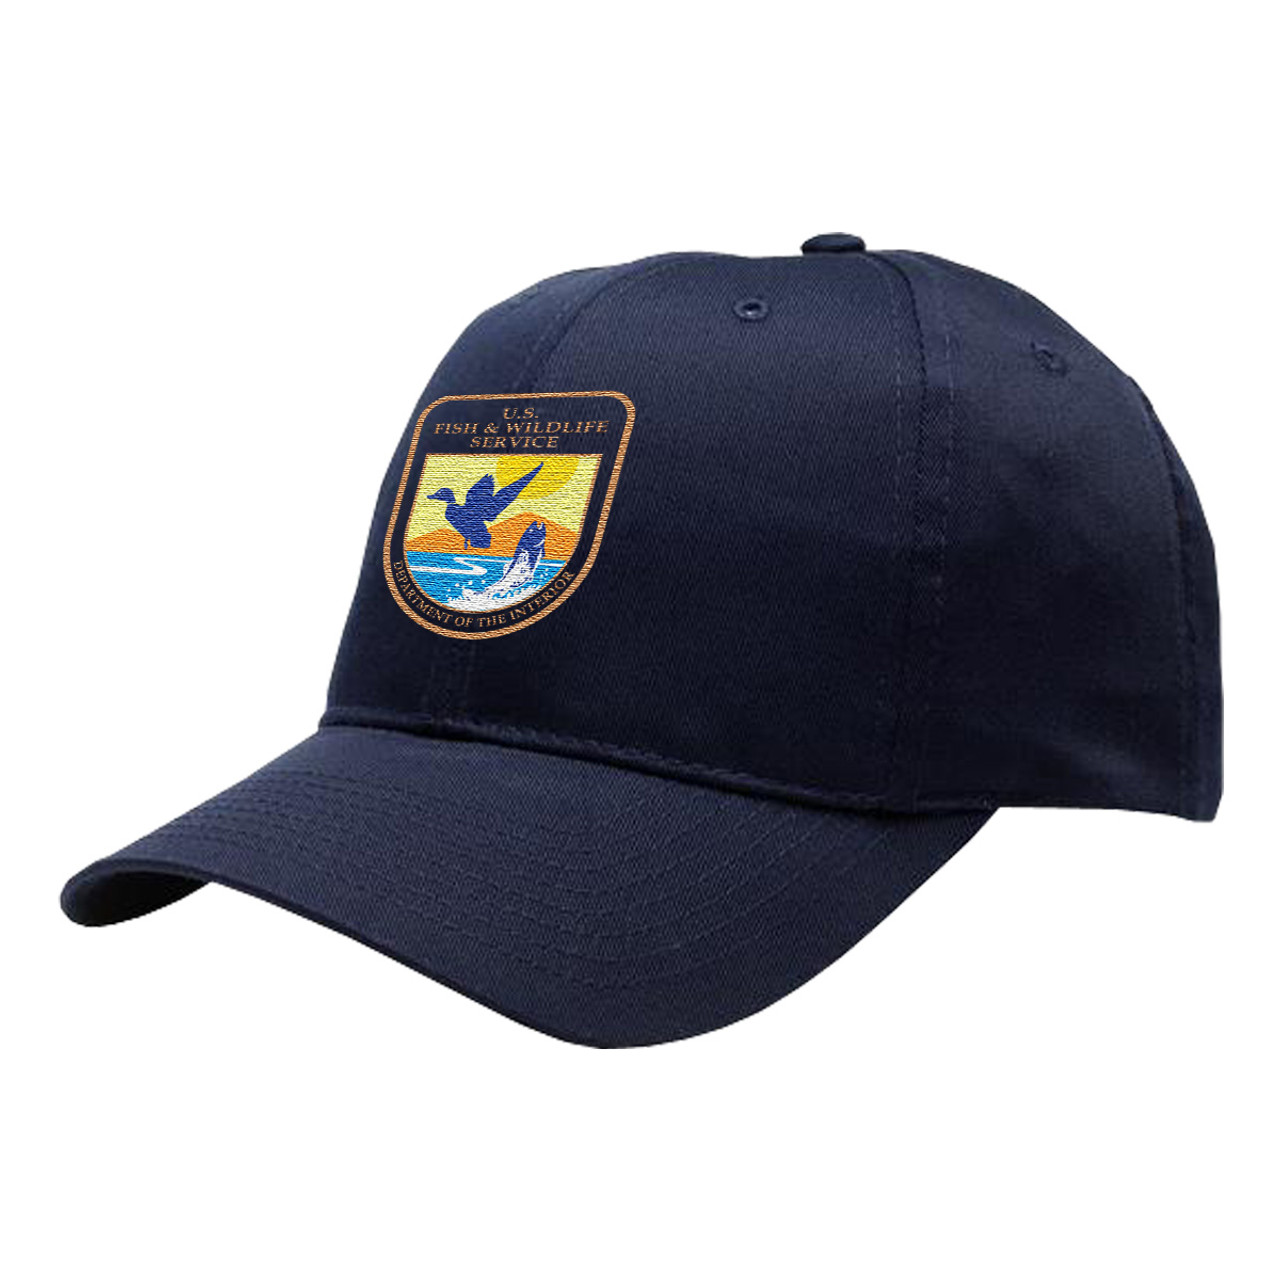 Fish & Wildlife Service Cap - Navy